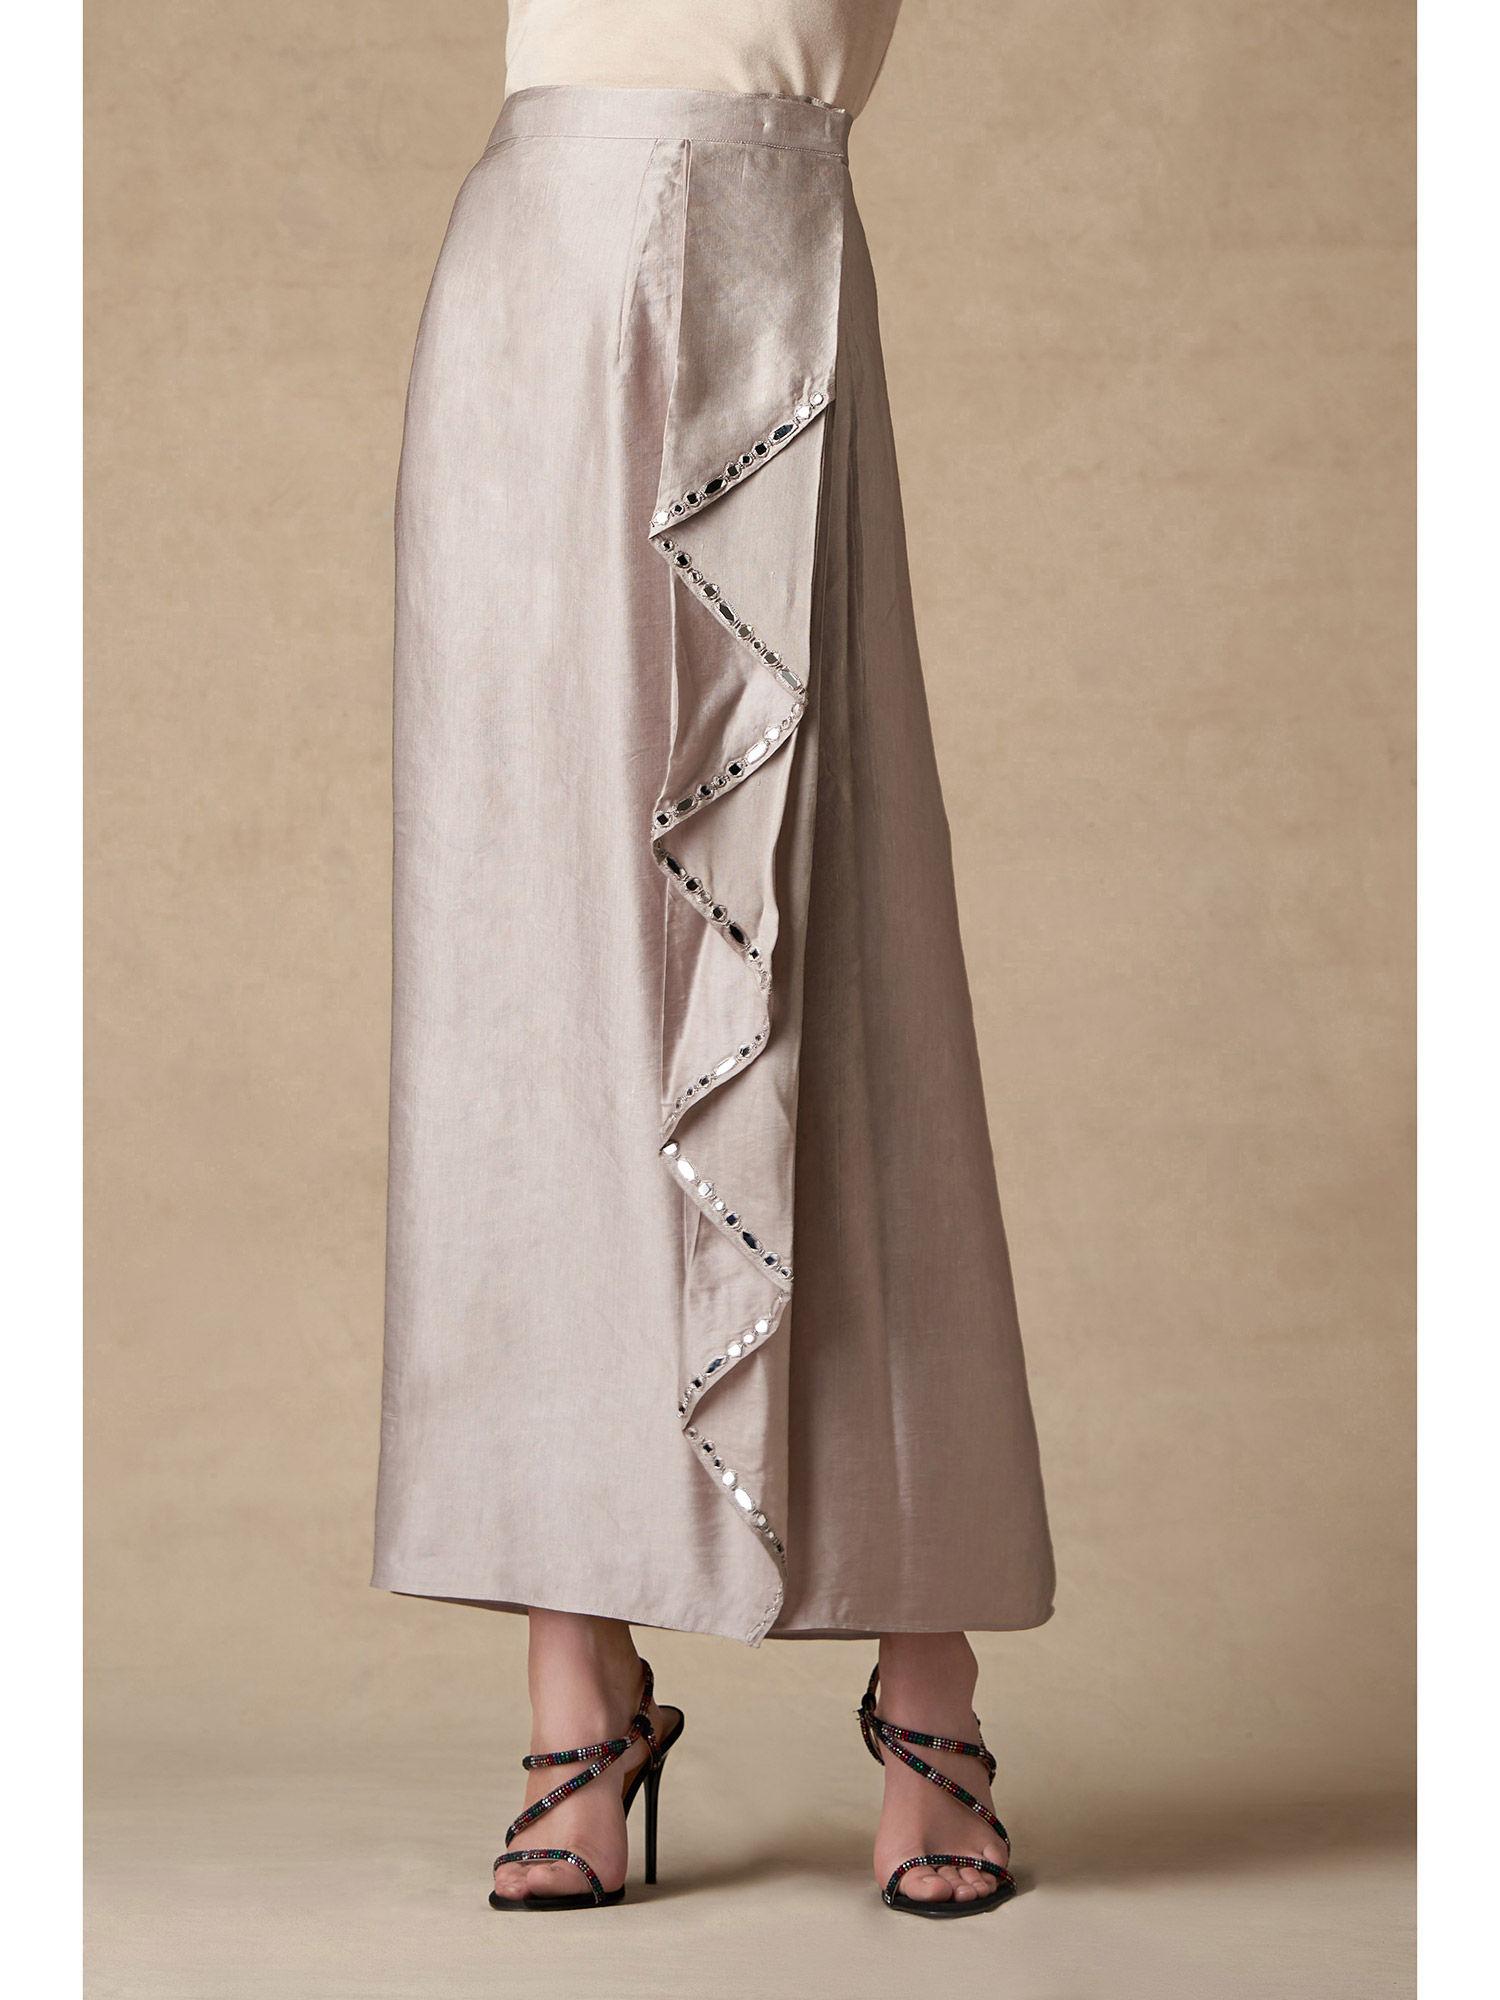 grey mirrorwork loongi skirt